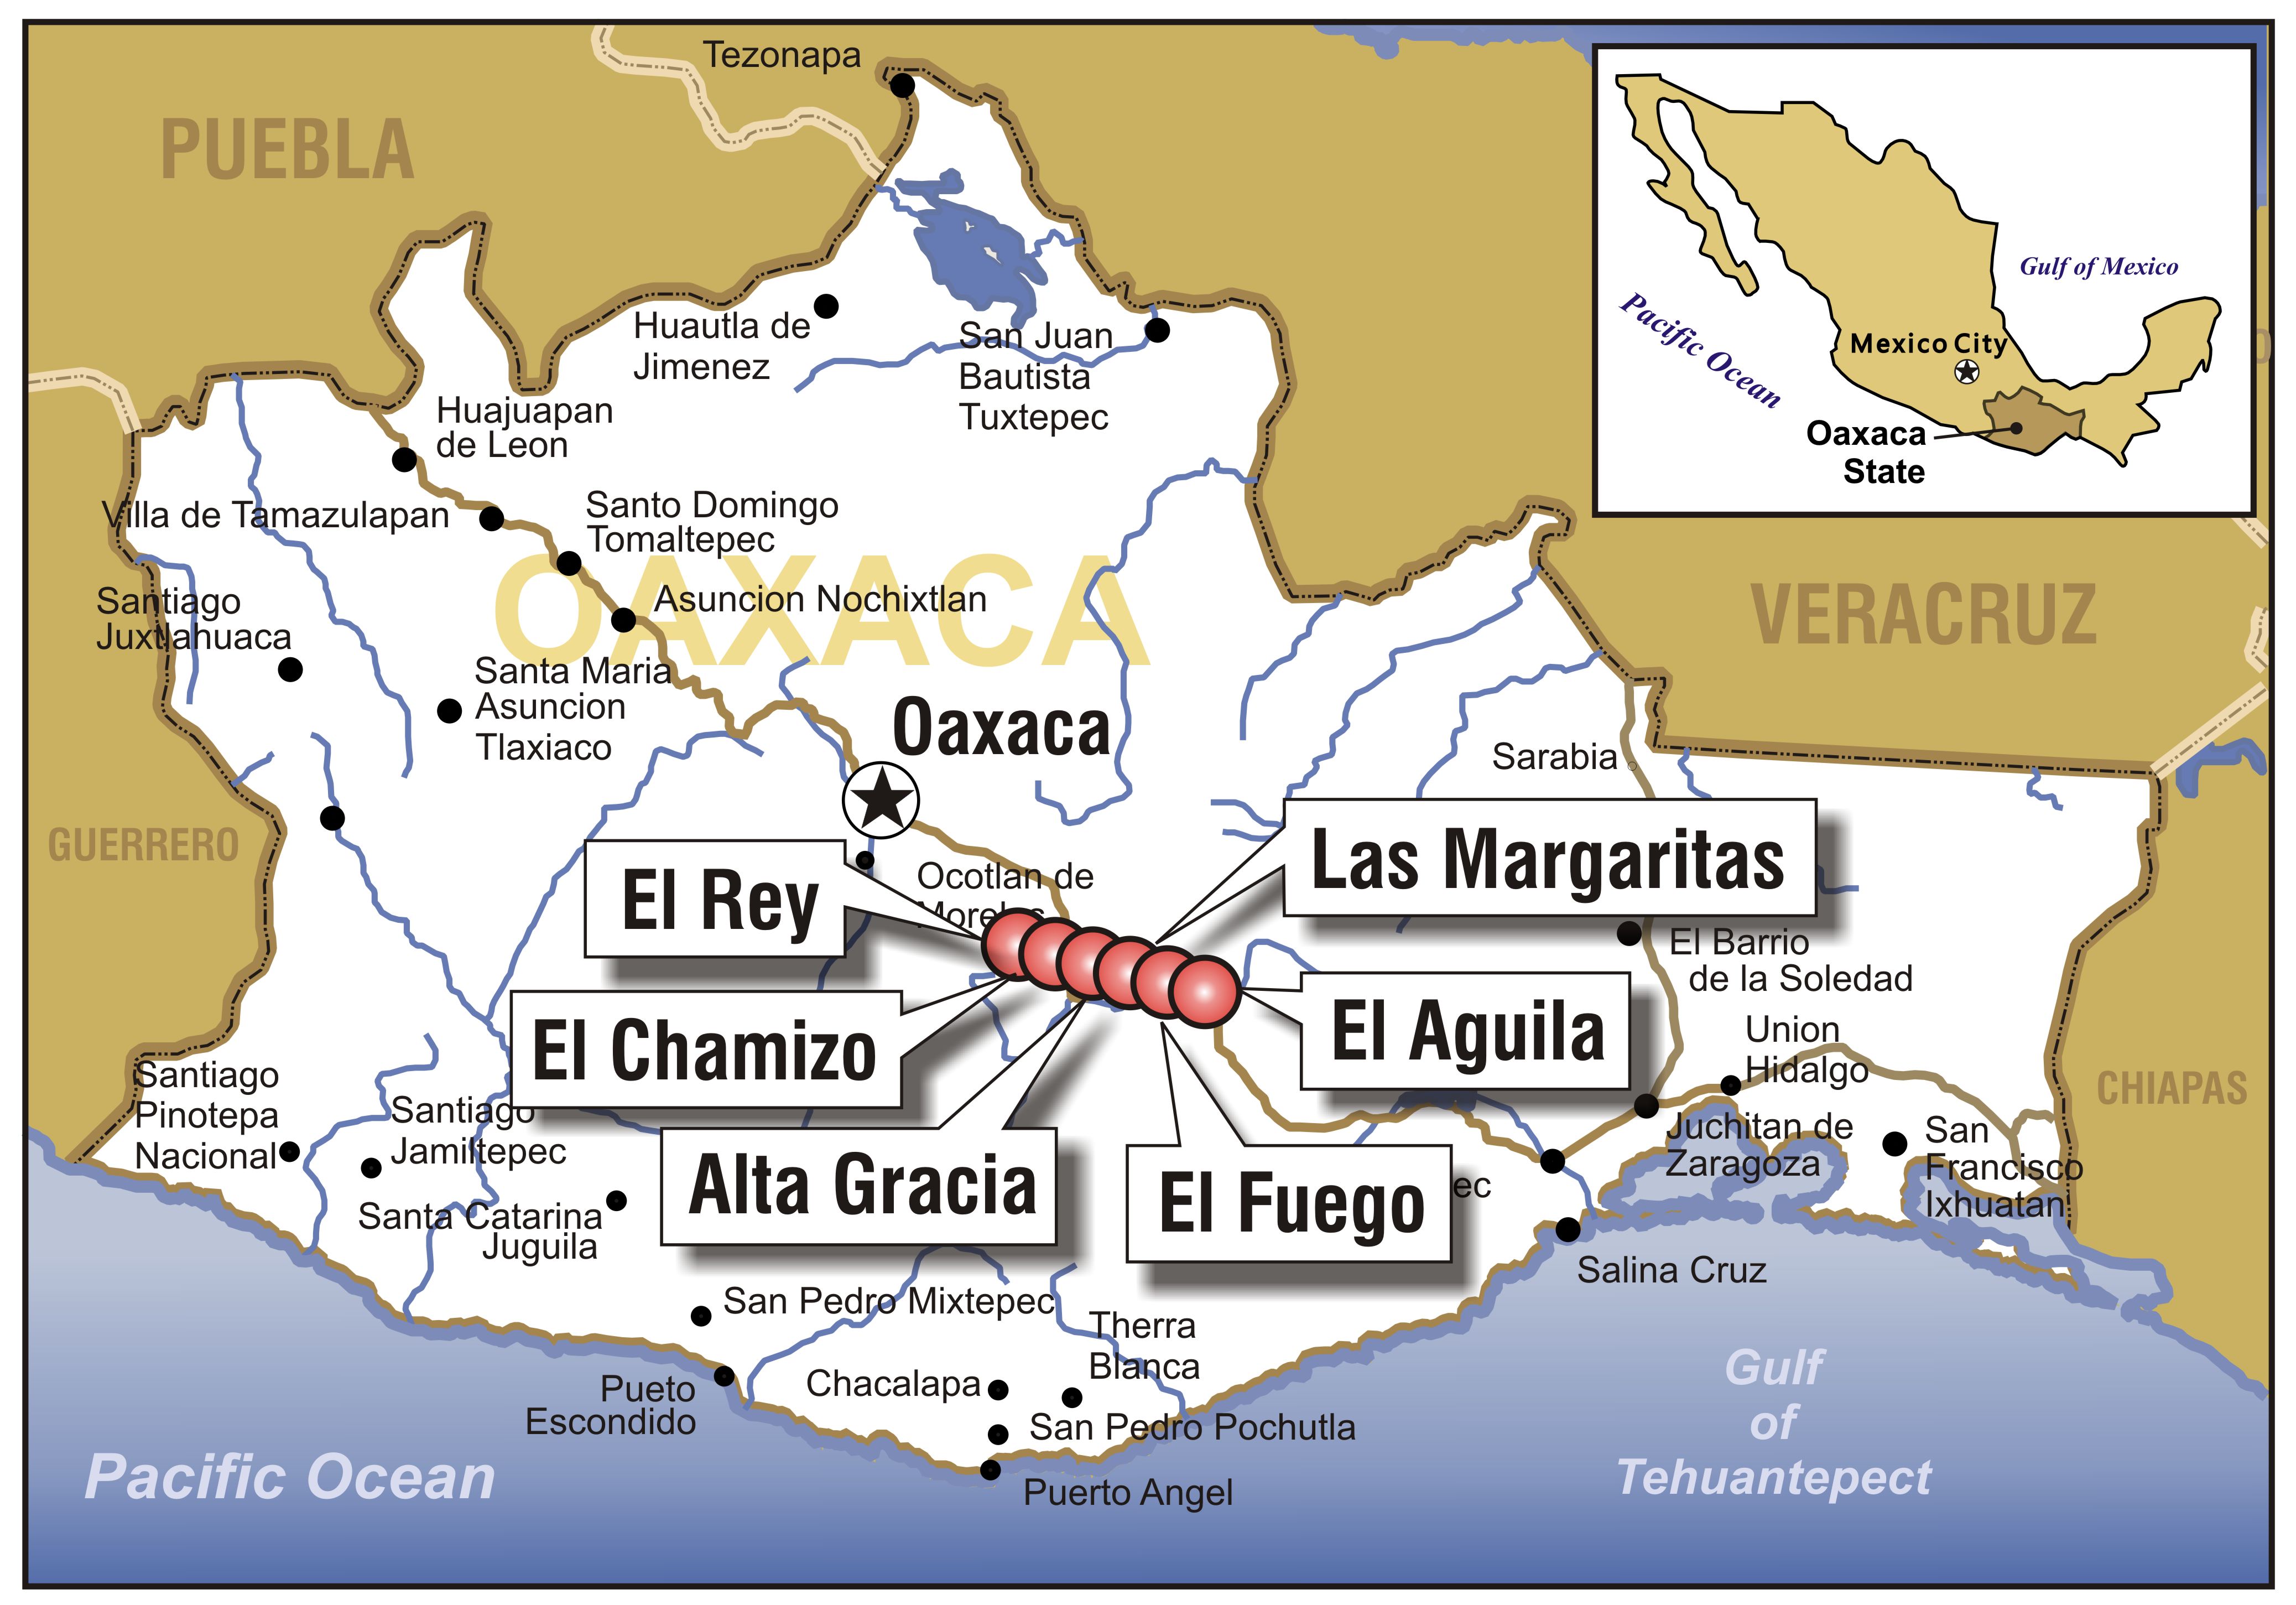 C:\Users\Jessica\AppData\Local\Microsoft\Windows\Temporary Internet Files\Content.Word\Oaxaca State Project Map.jpg